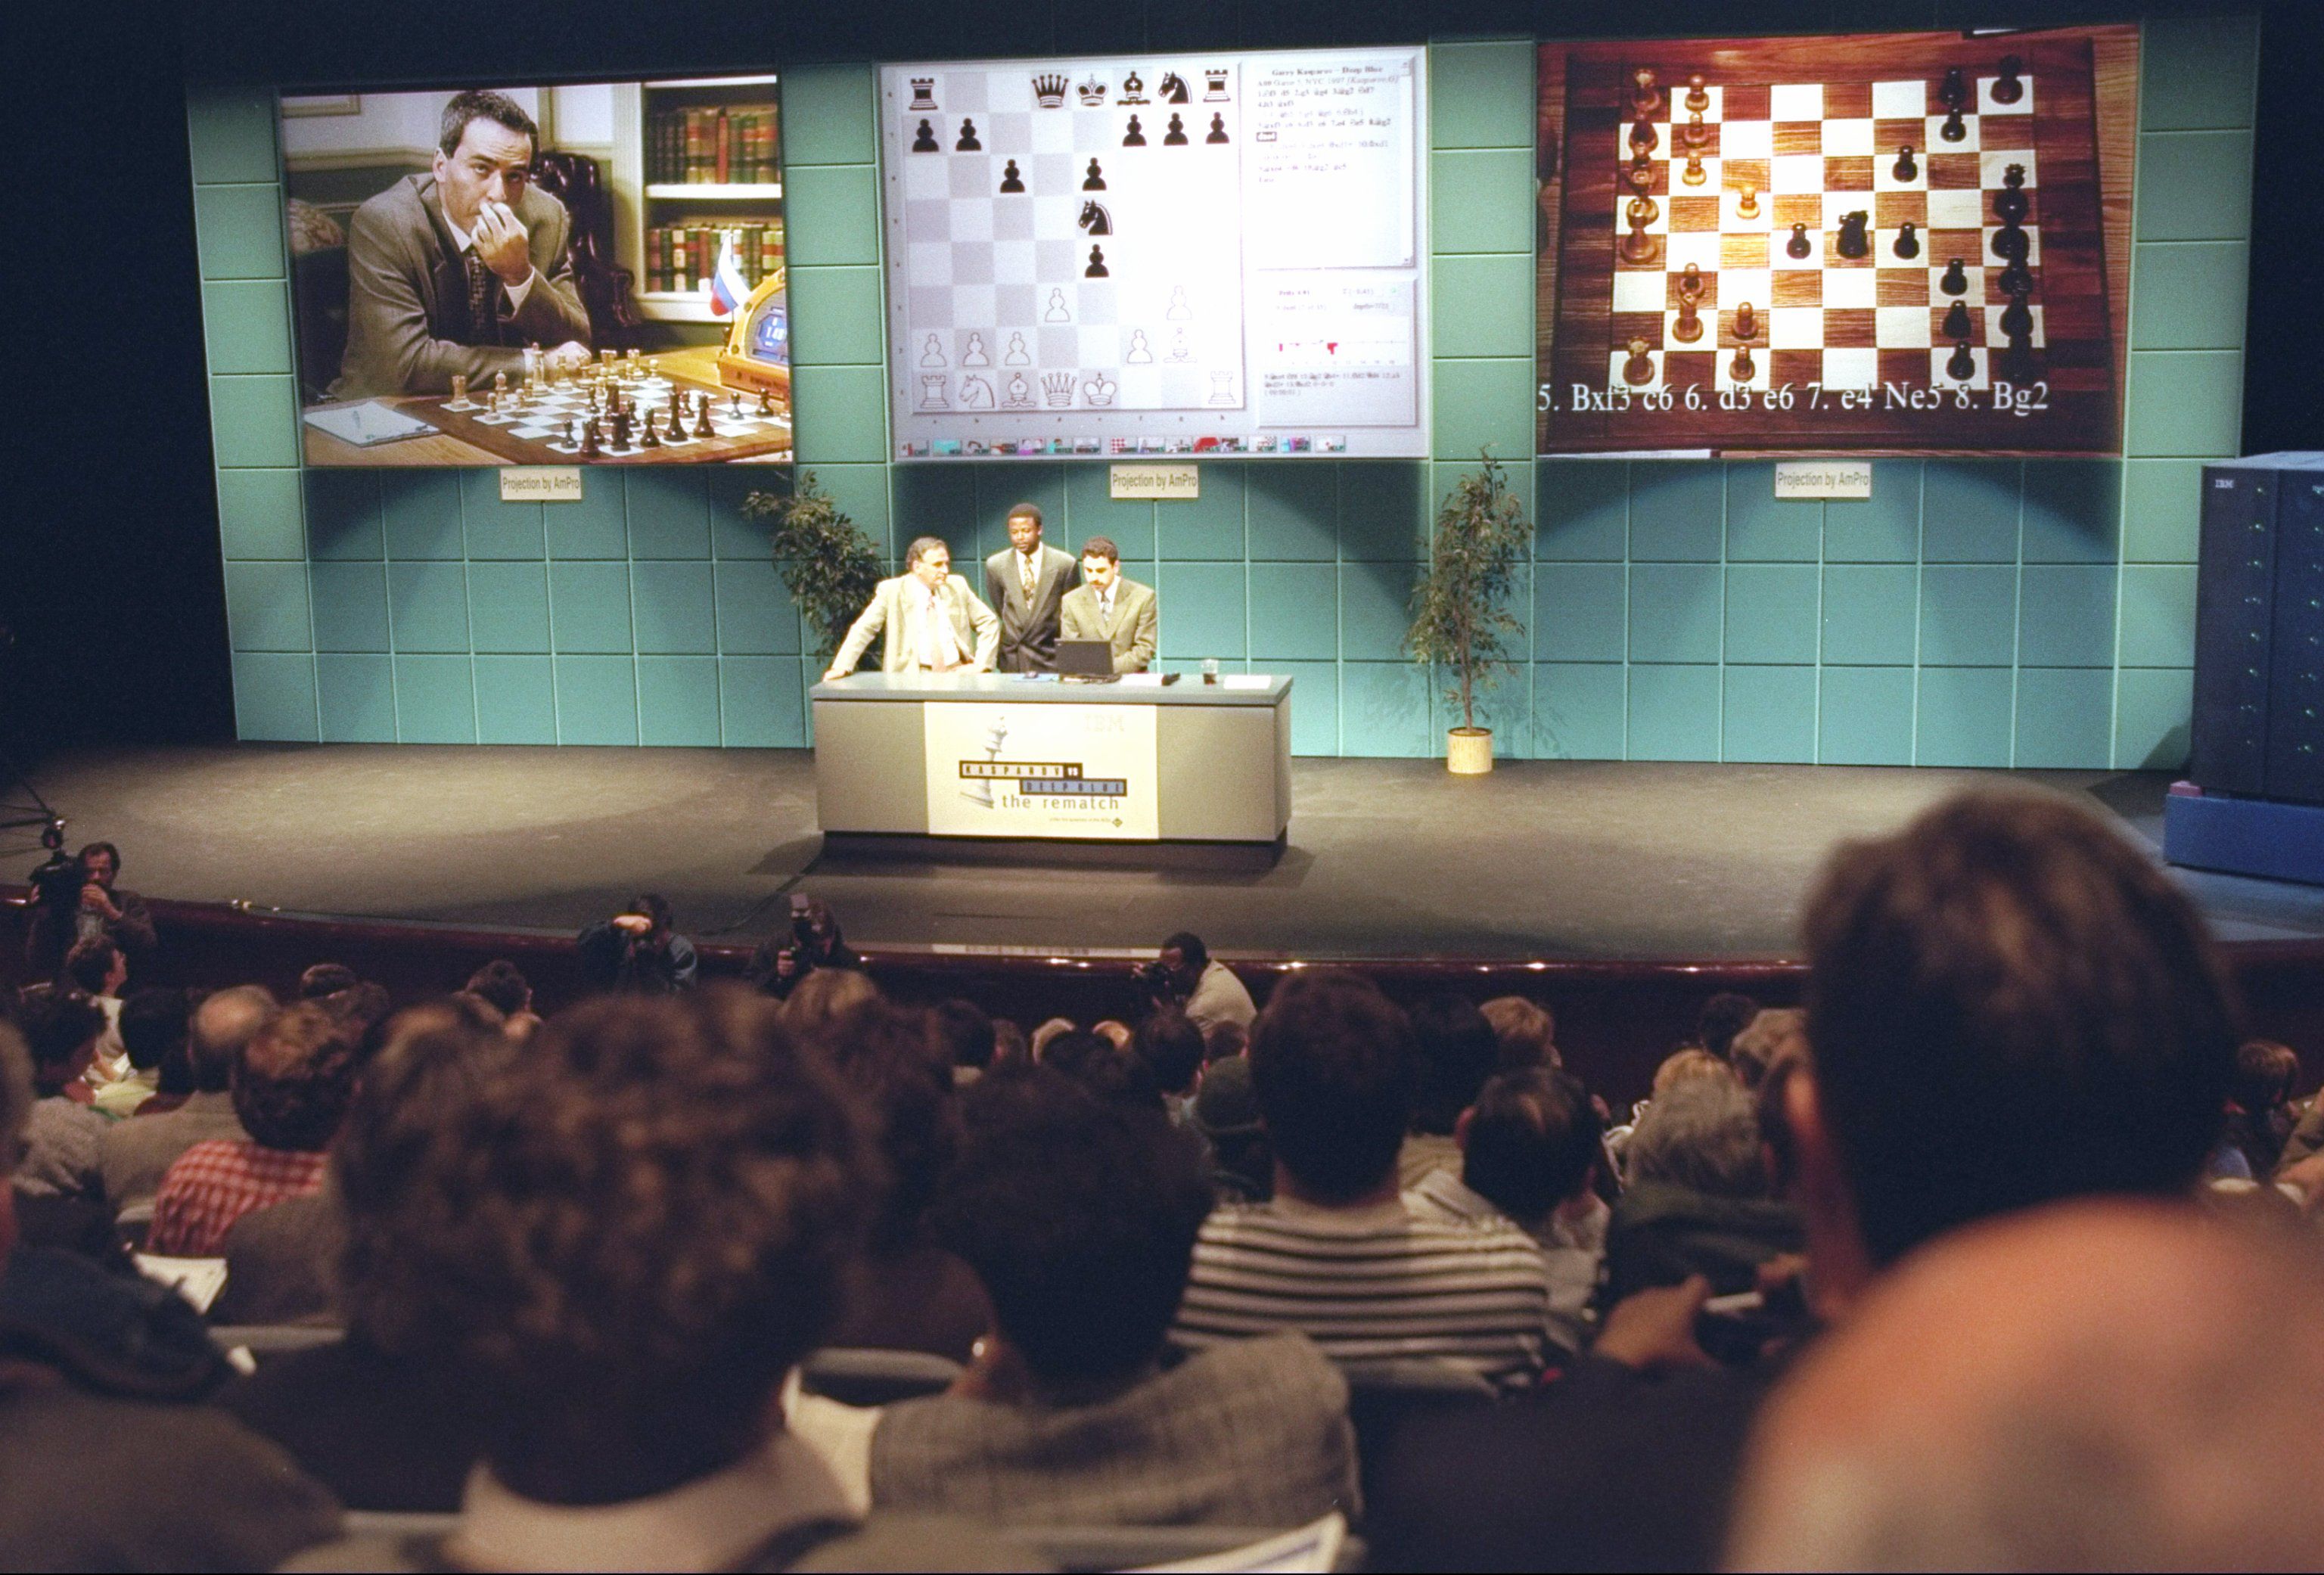 Garry Kasparov vs Deep Blue - video Dailymotion